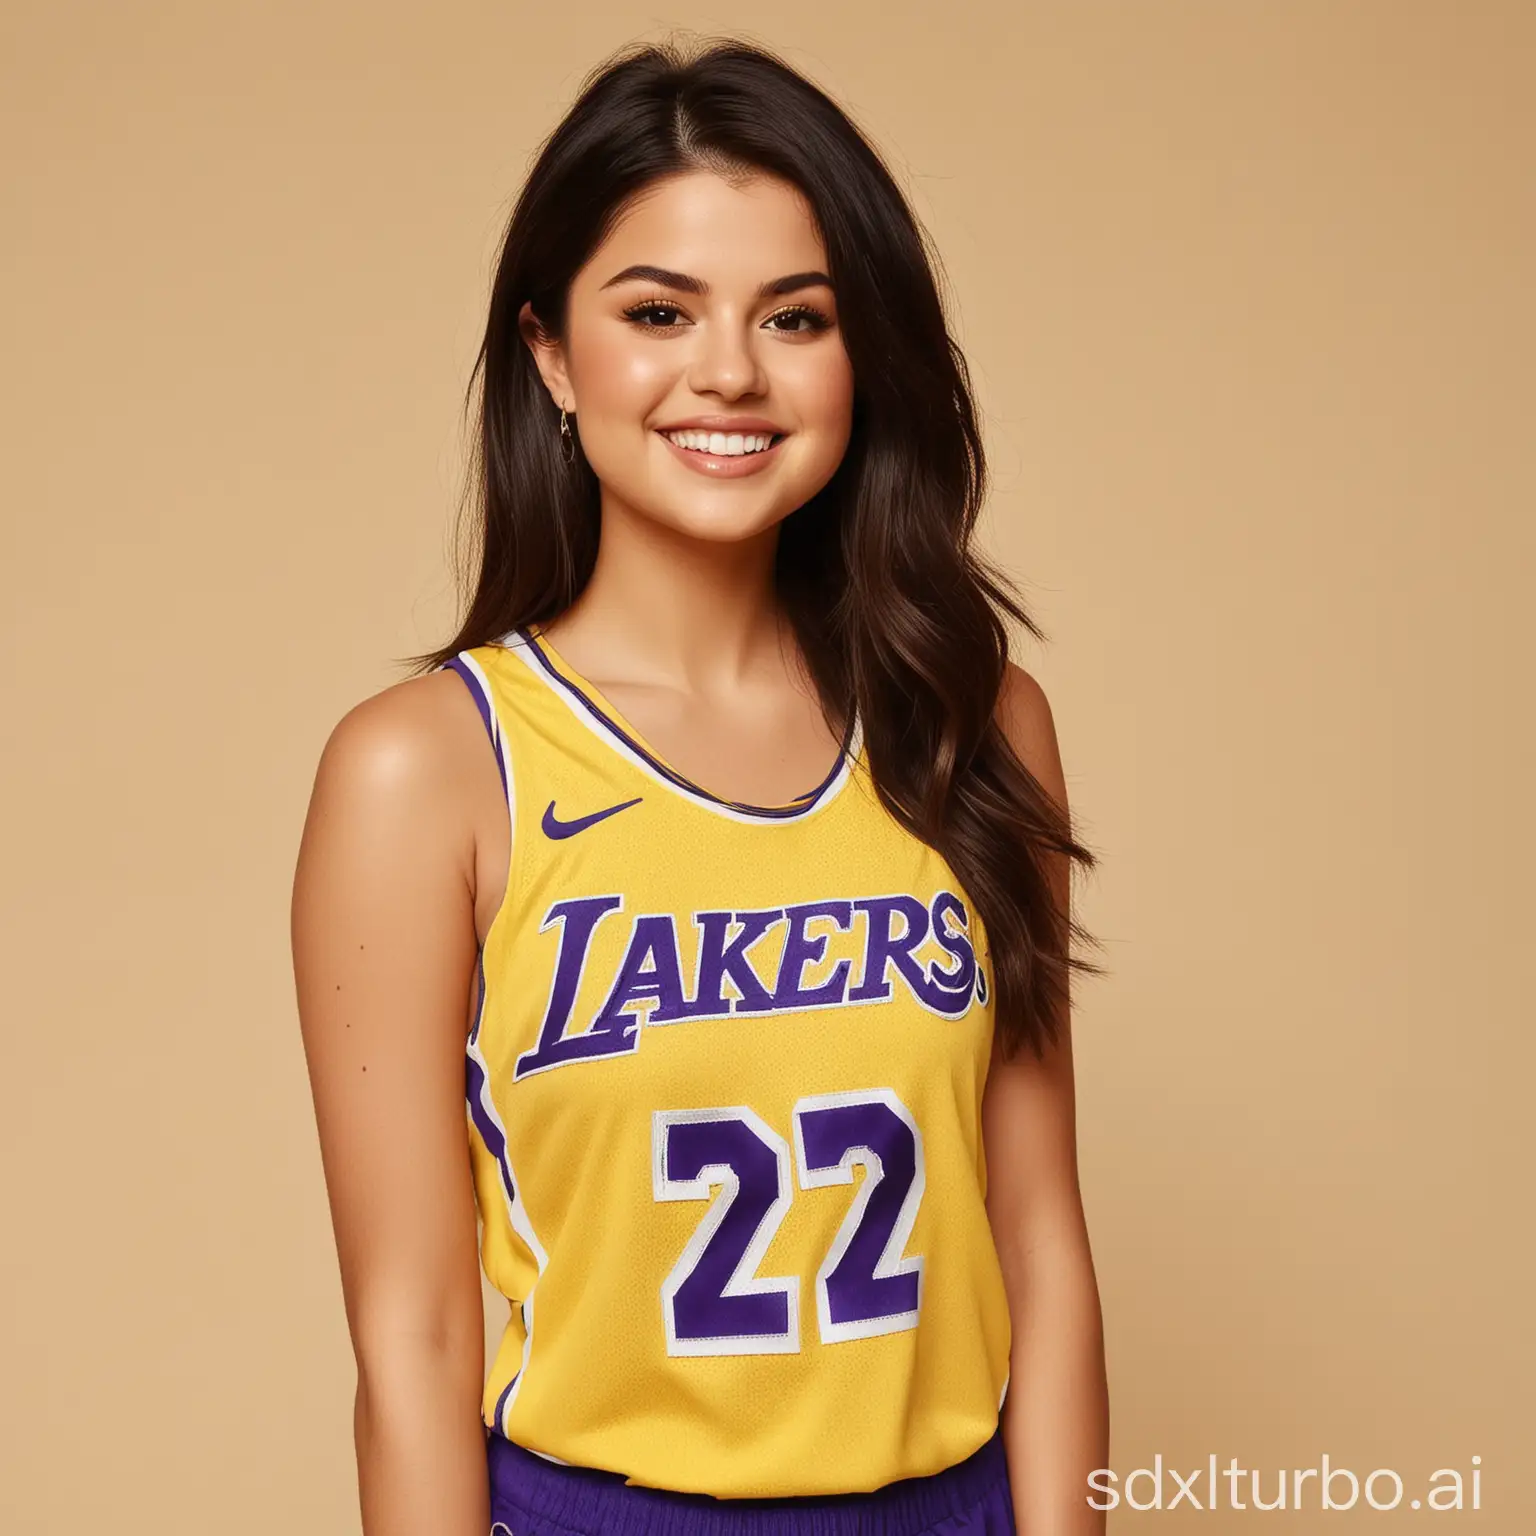 Selena-Gomez-Smiling-in-Lakers-Jersey-Number-Twelve-on-Beige-Background